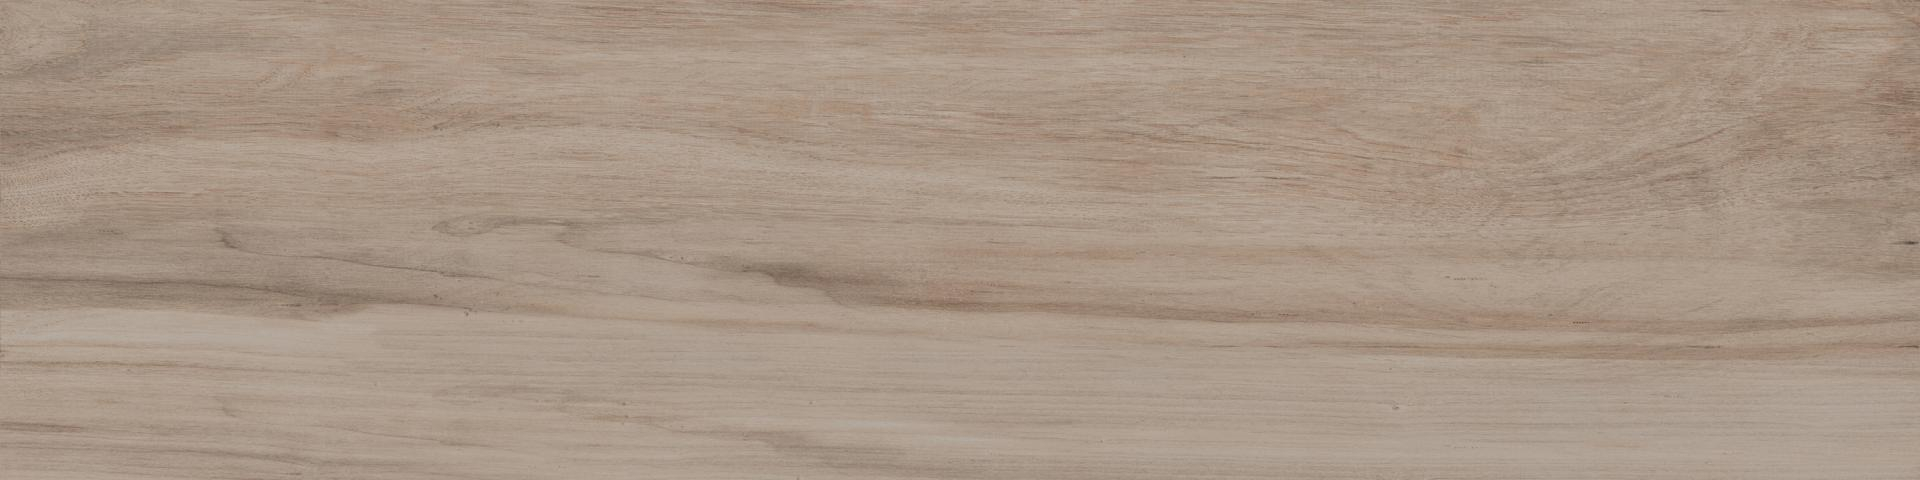 carrelage-sol-keywood-naturel-22-5x90cm-argenta-0